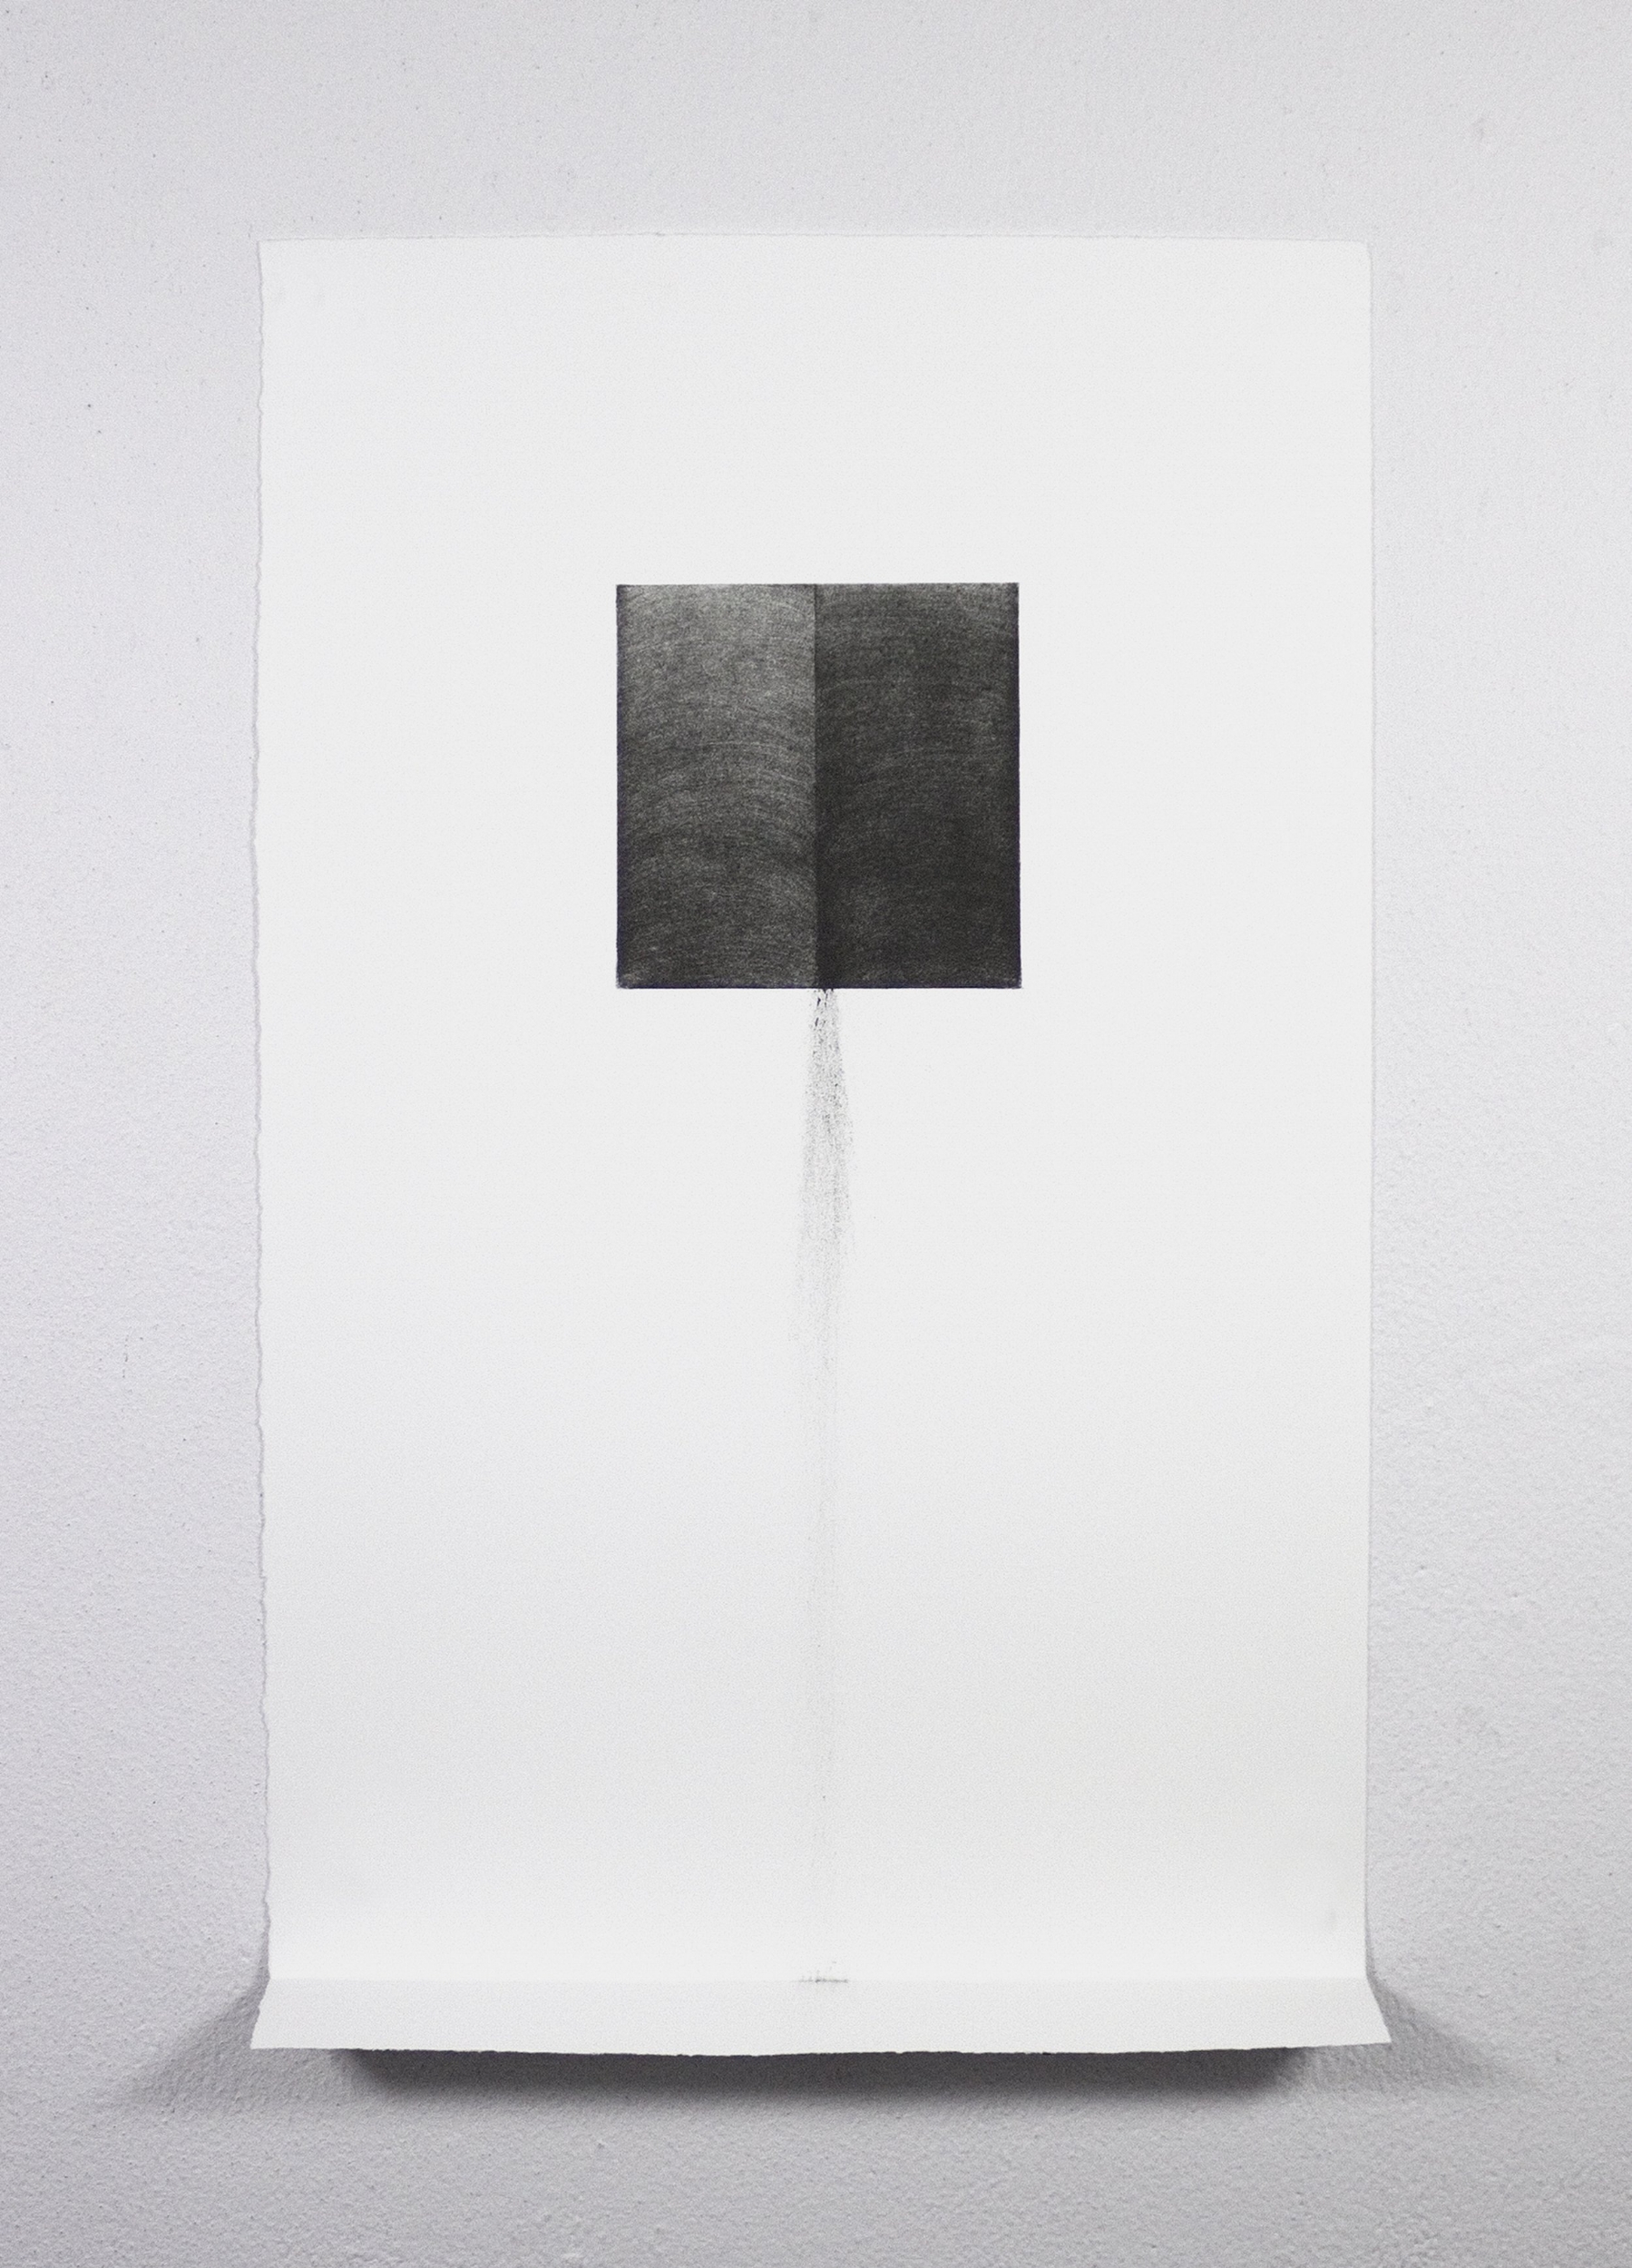  Unfolding Gravity No.1, 2015  Single-color lithograph, Edition of 15, 17.5x11x1.5” (Paper size), Framed size: 18.8” x 13” x 2.5”,  Contributing Printer: Bill Lagattuta at Tamarind Institute 